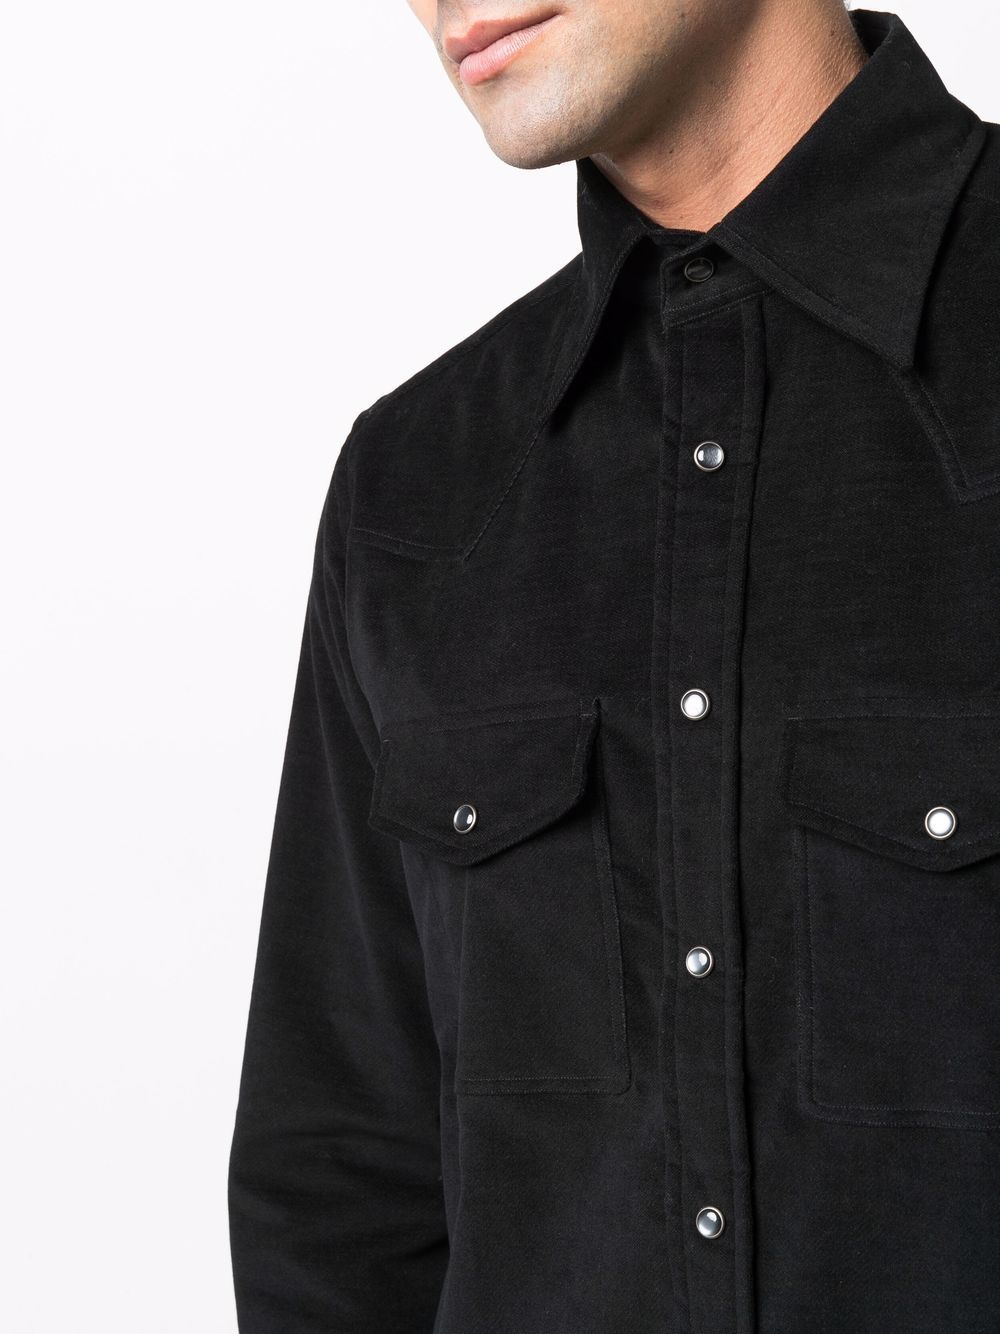 TOM FORD Long Sleeve Buttoned Shirt Black - MAISONDEFASHION.COM